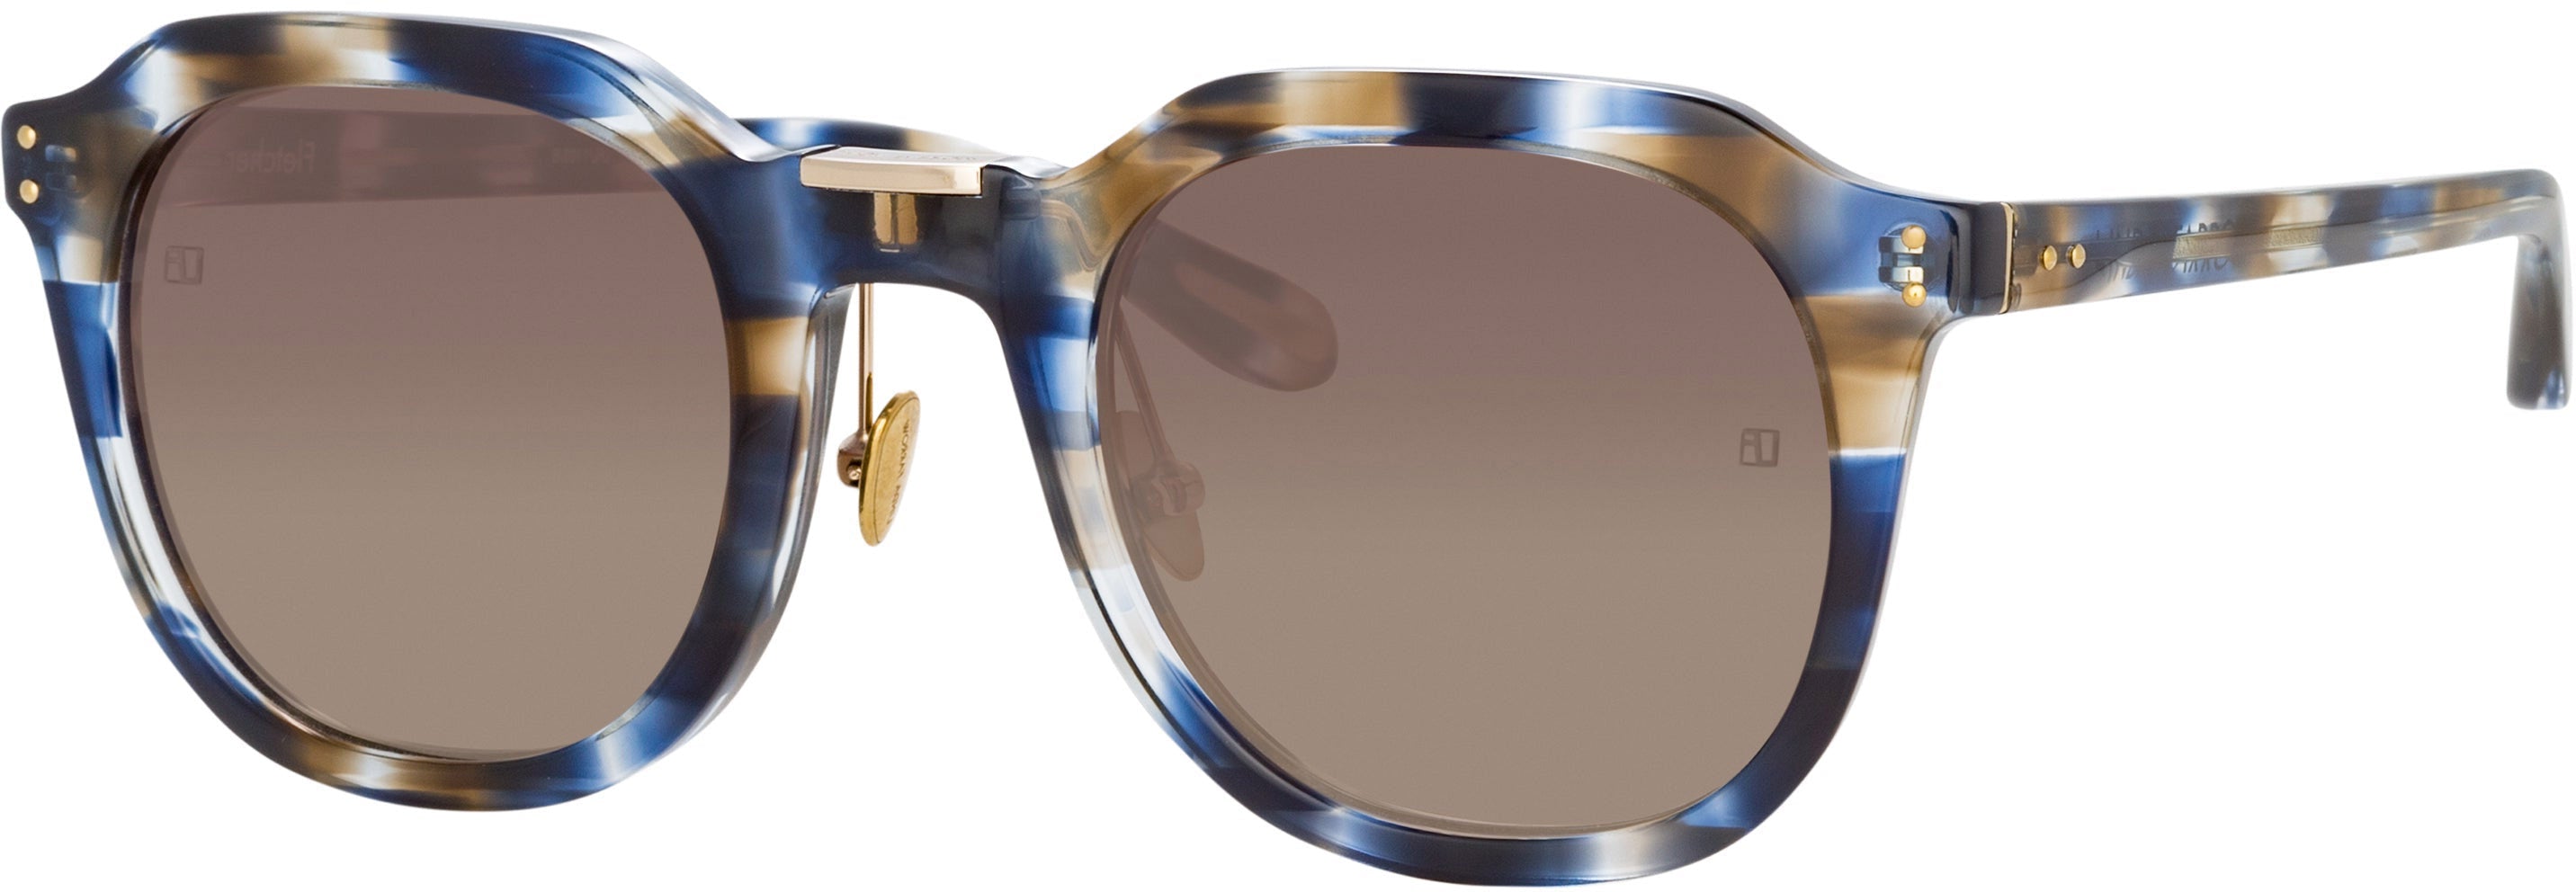 Color_LFL1103C8SUN - Fletcher Angular Sunglasses in Blue Tortoiseshell